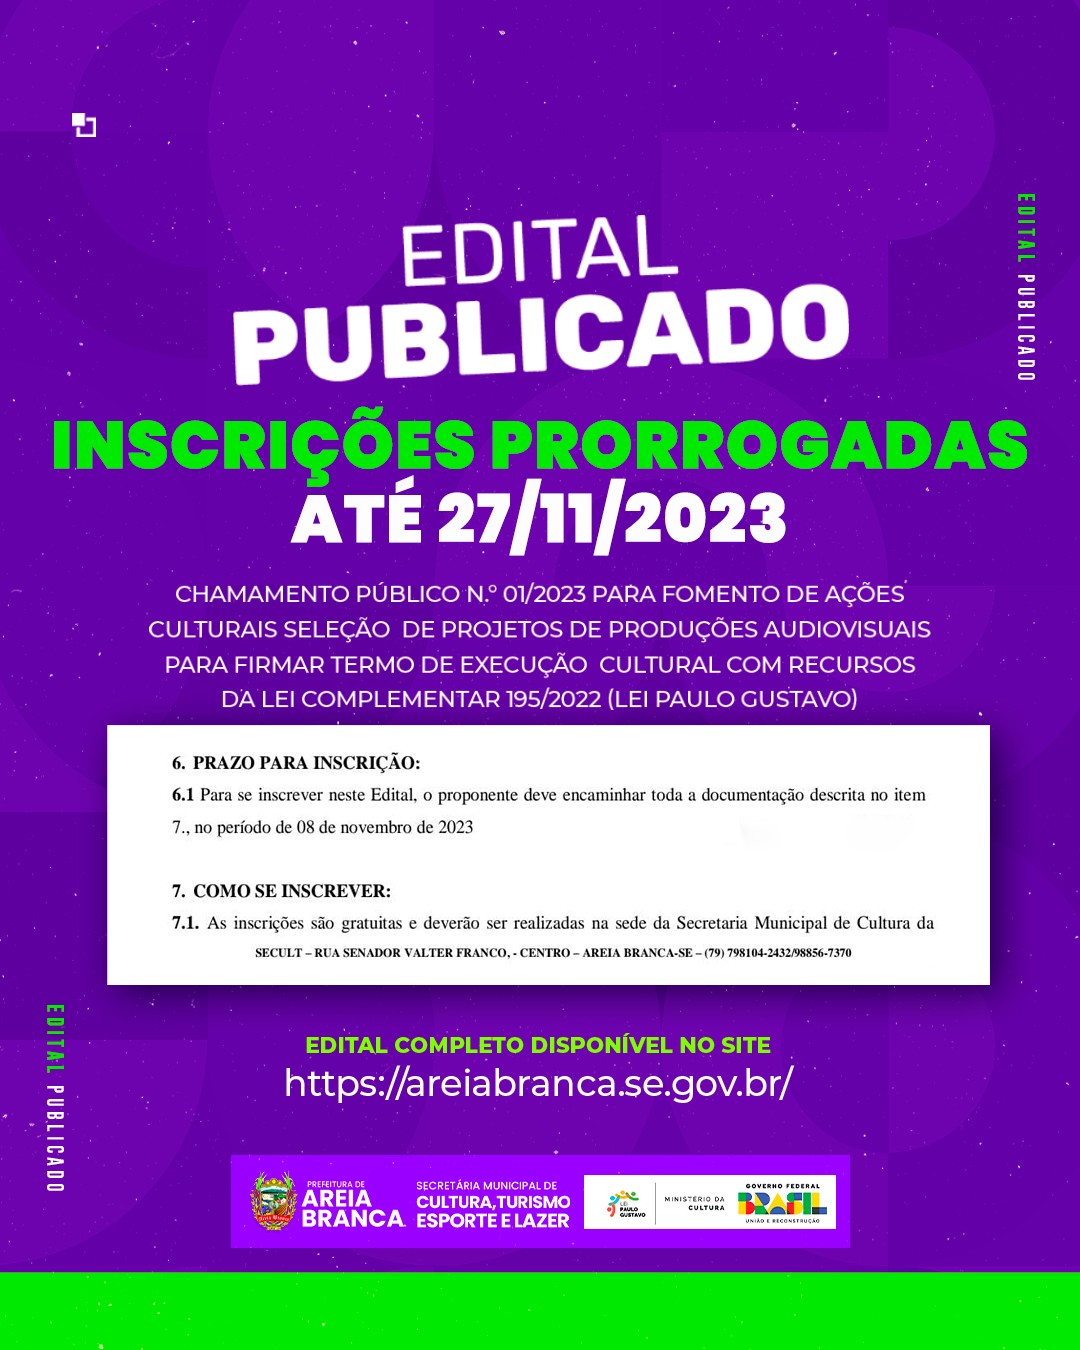 Edital de Chamamento Público para a Lei Paulo Gustavo (2023) é publicado